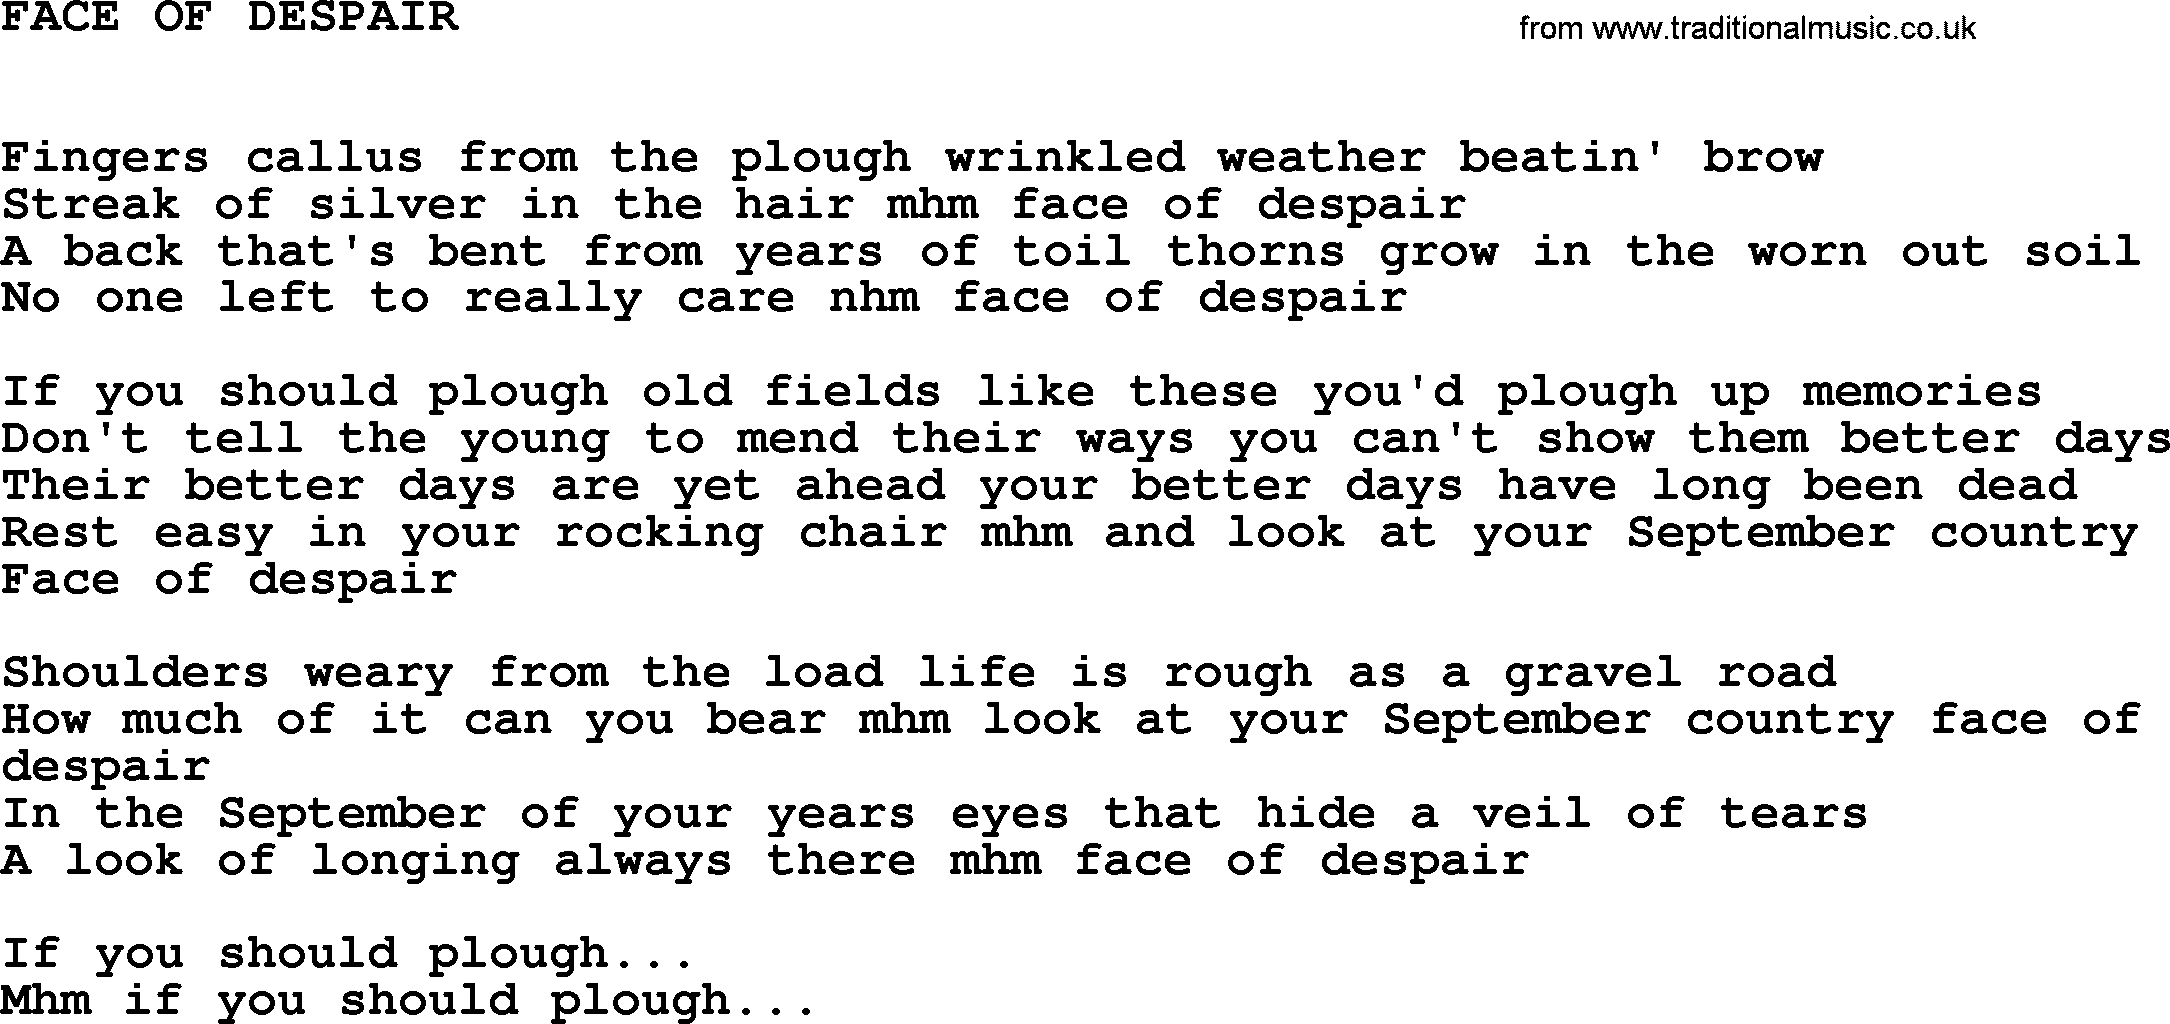 Johnny Cash song Face Of Despair.txt lyrics